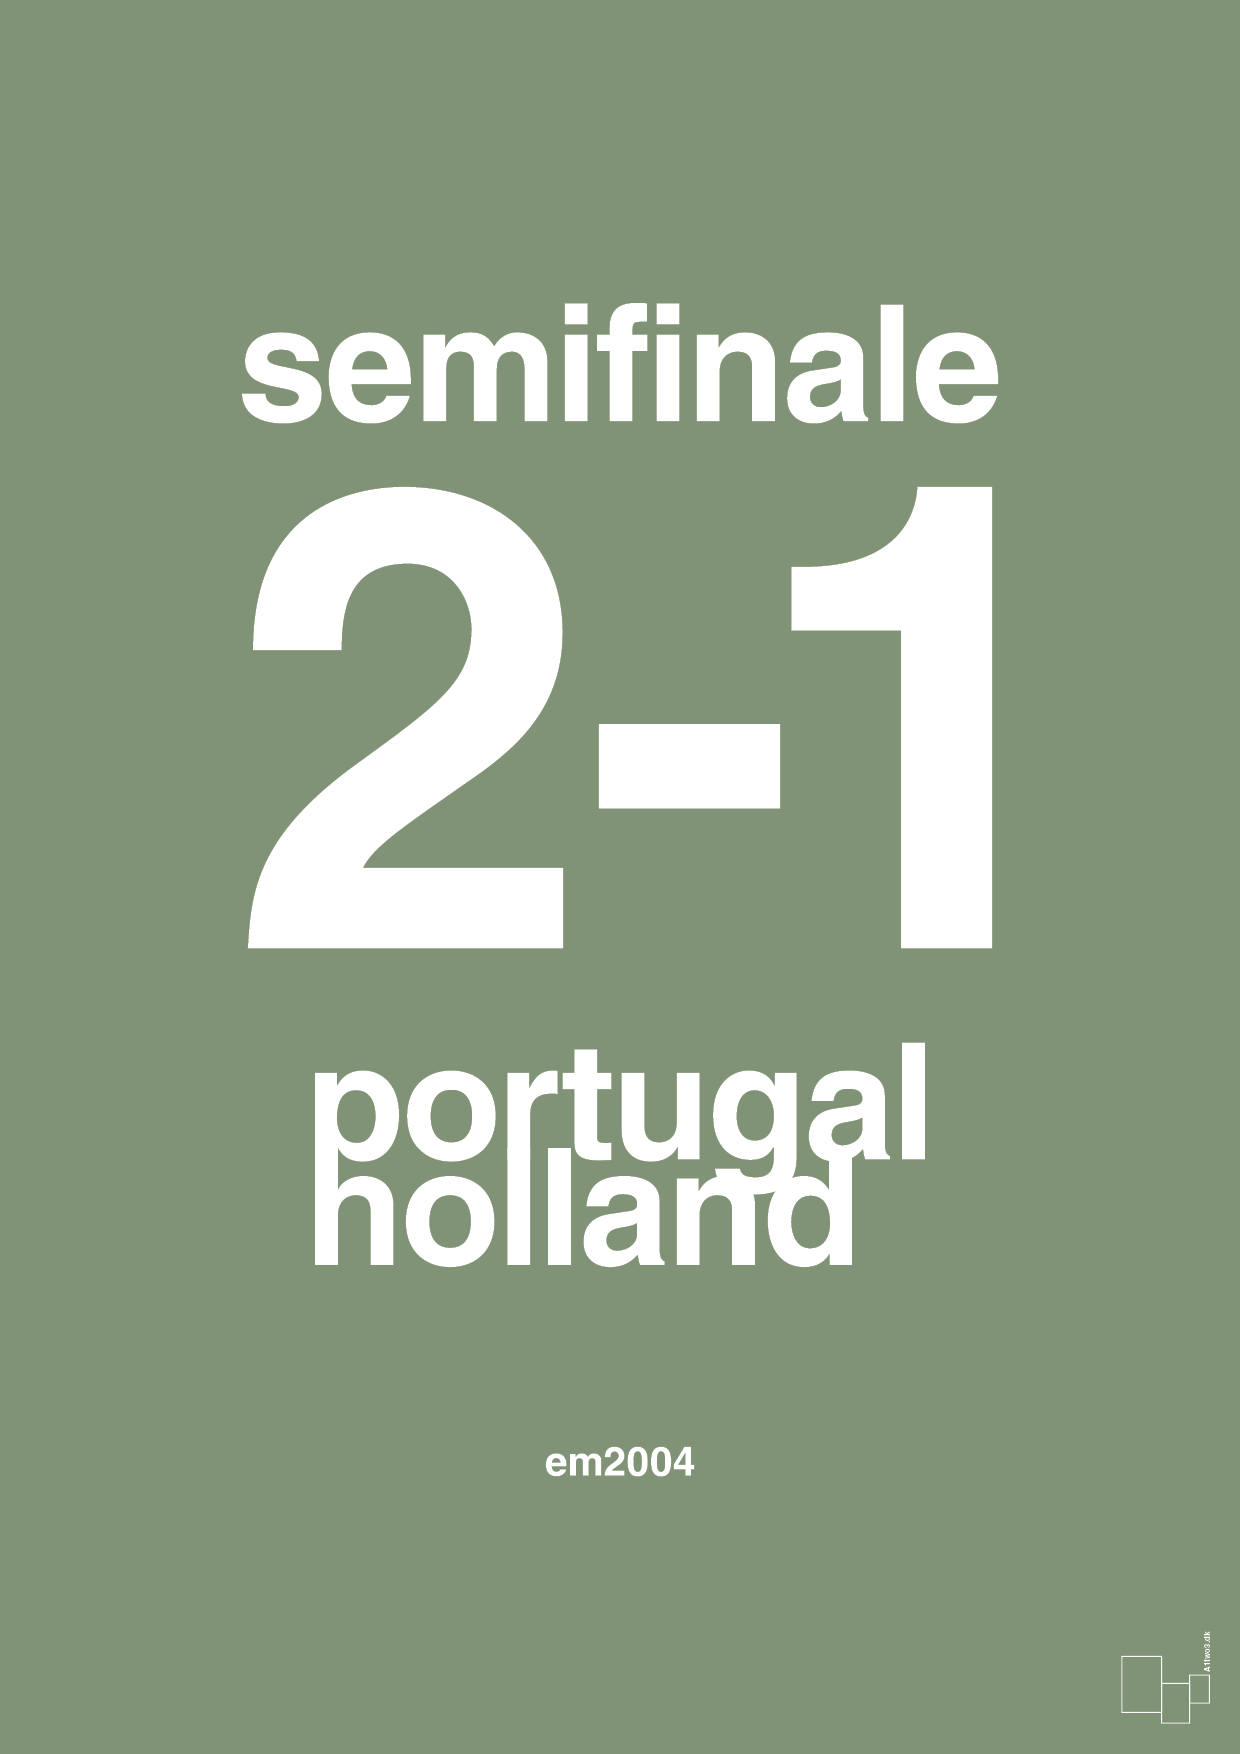 resultat for fodbold em semifinale B i 2004 - Plakat med Sport & Fritid i Jade